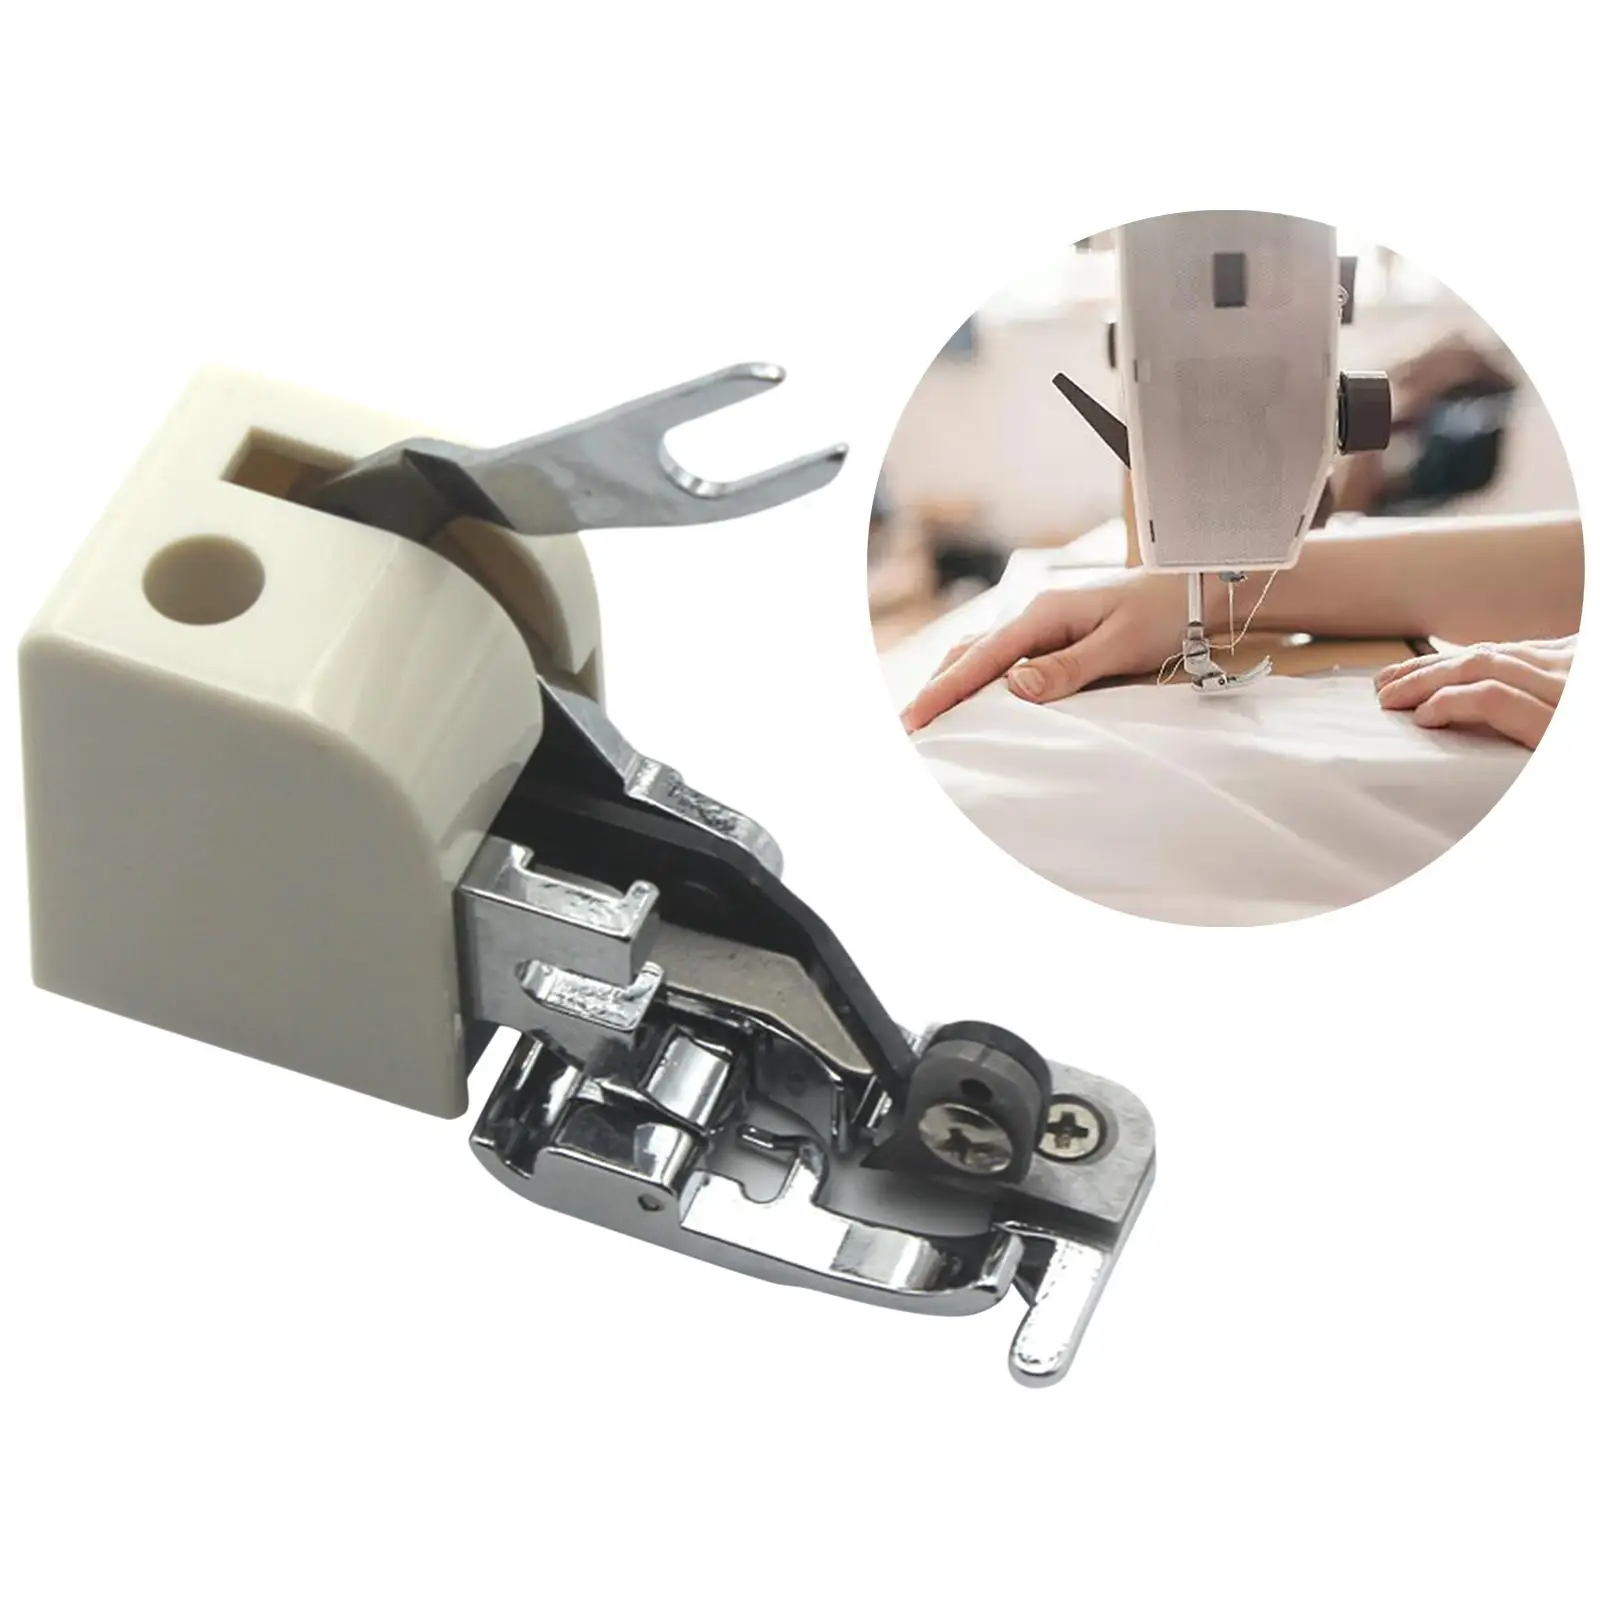 Sewing Machine Side Cutter Overlock Presser Foot  Trims Hems Edges